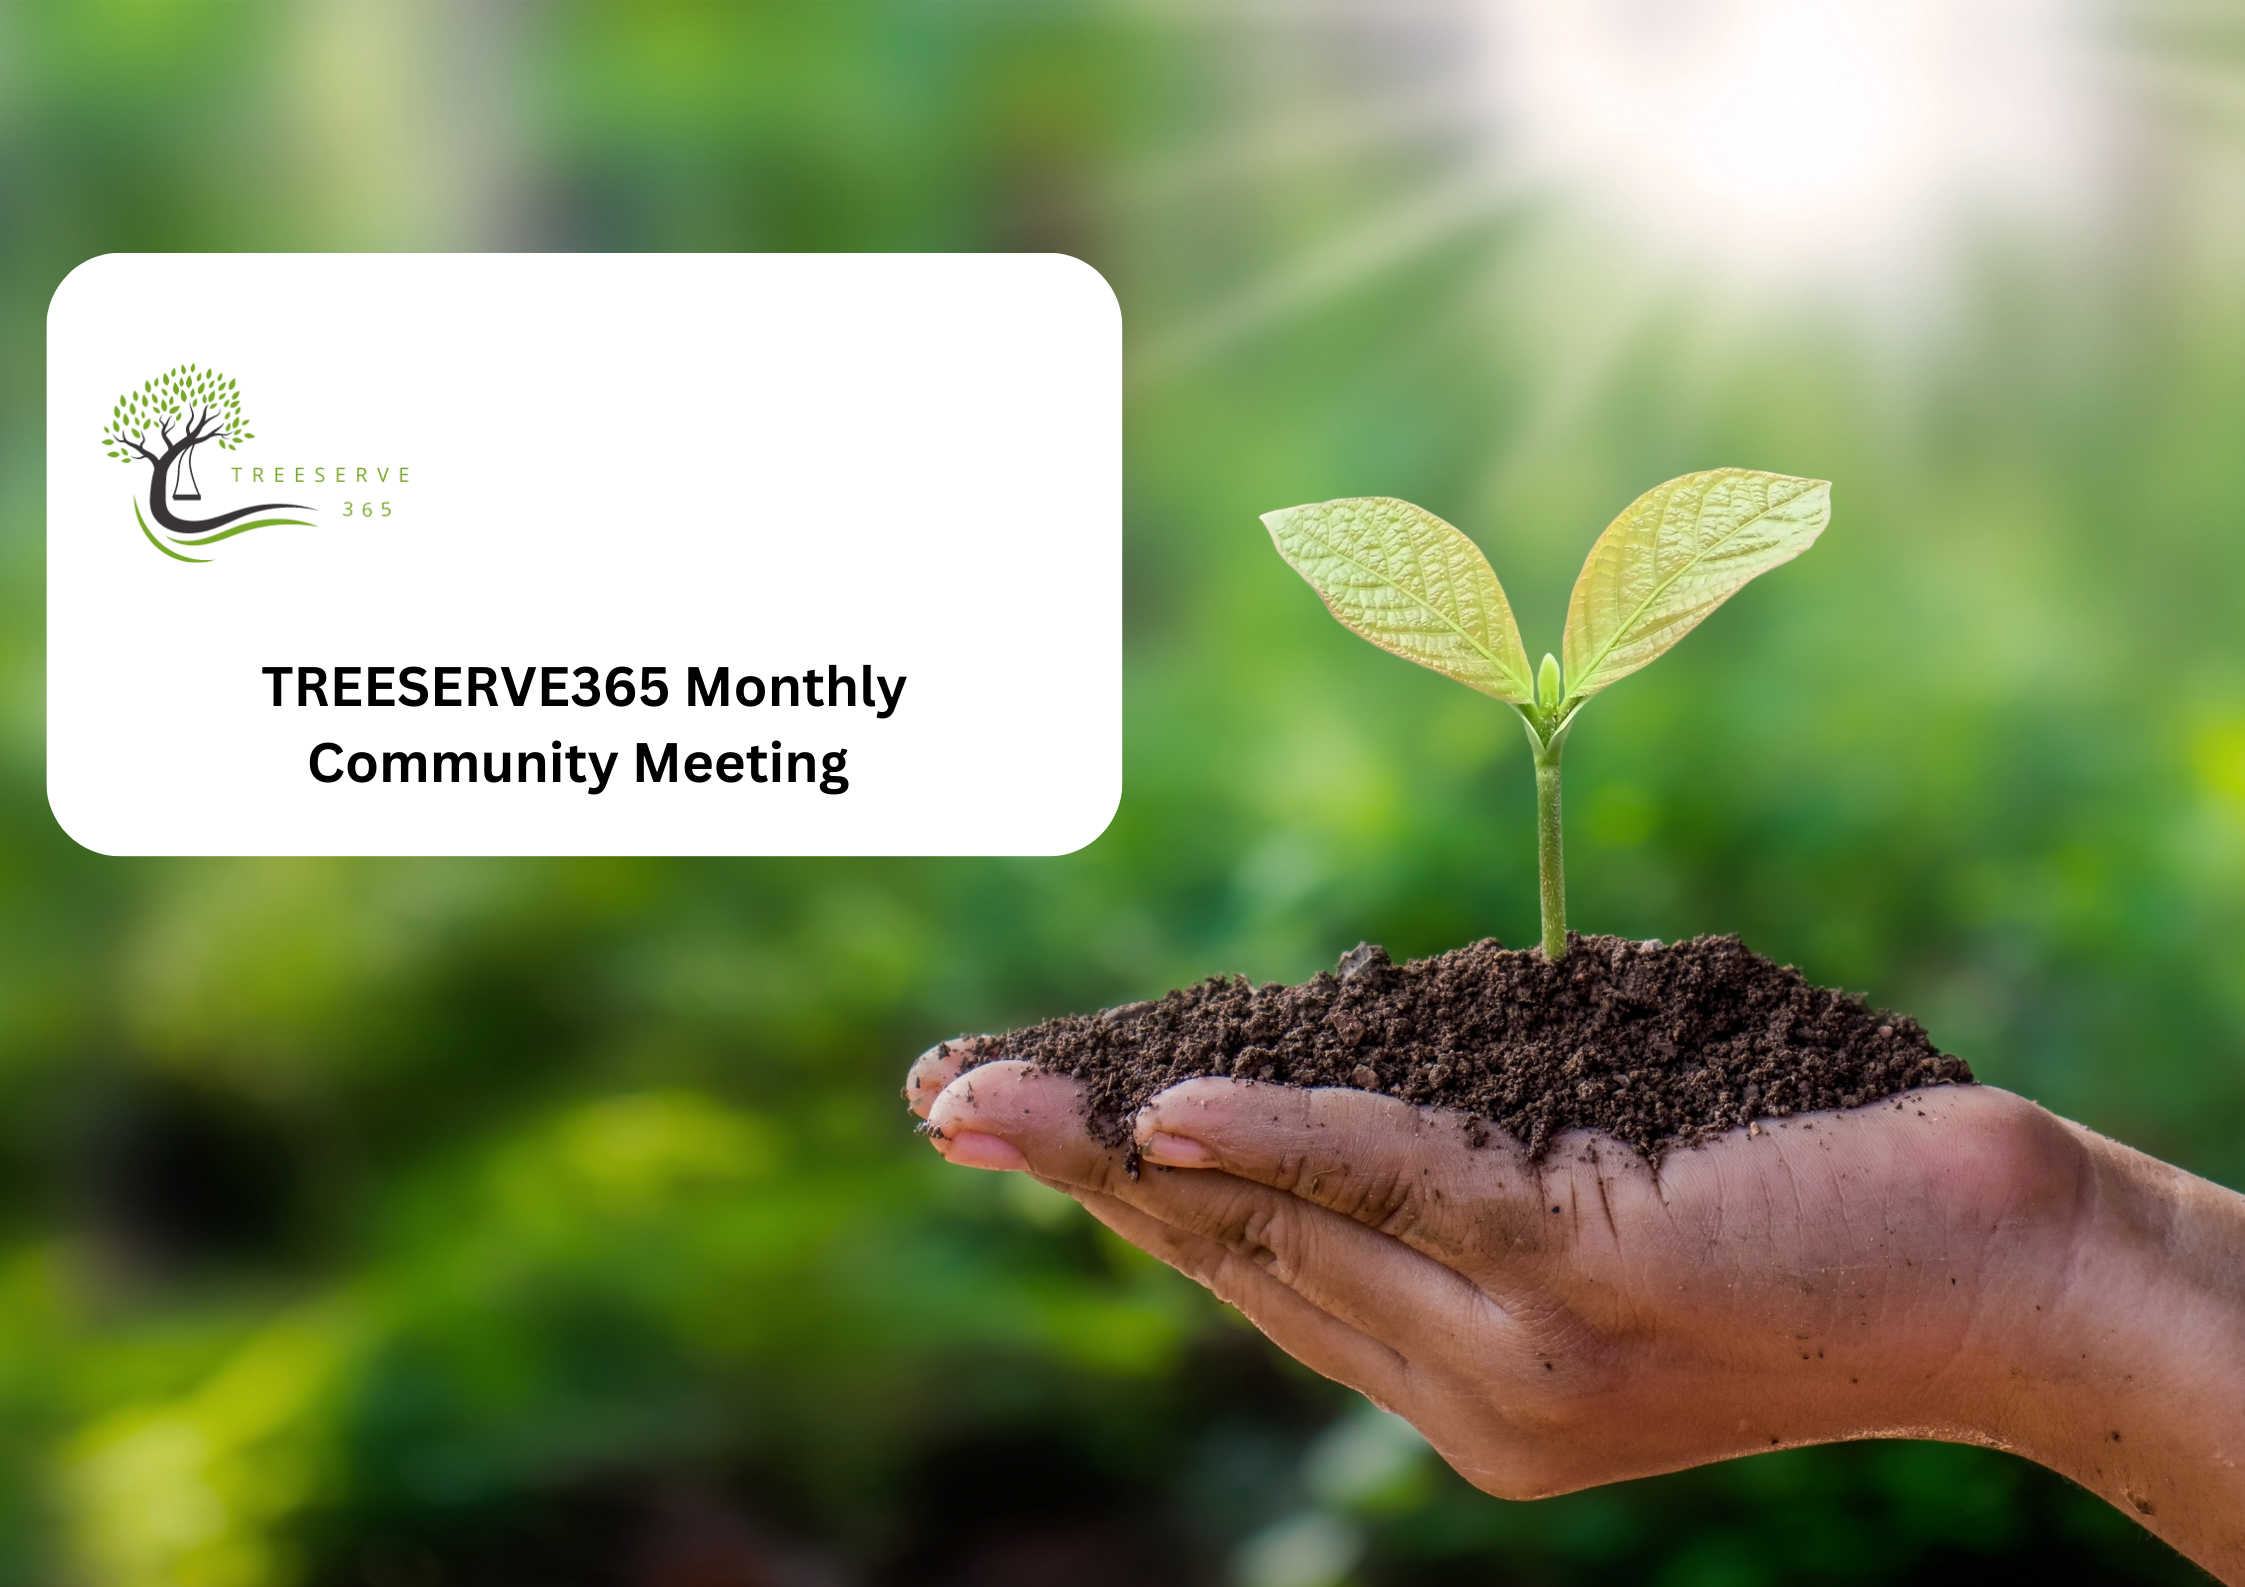 Treeserve365 Monthly Community Meeting